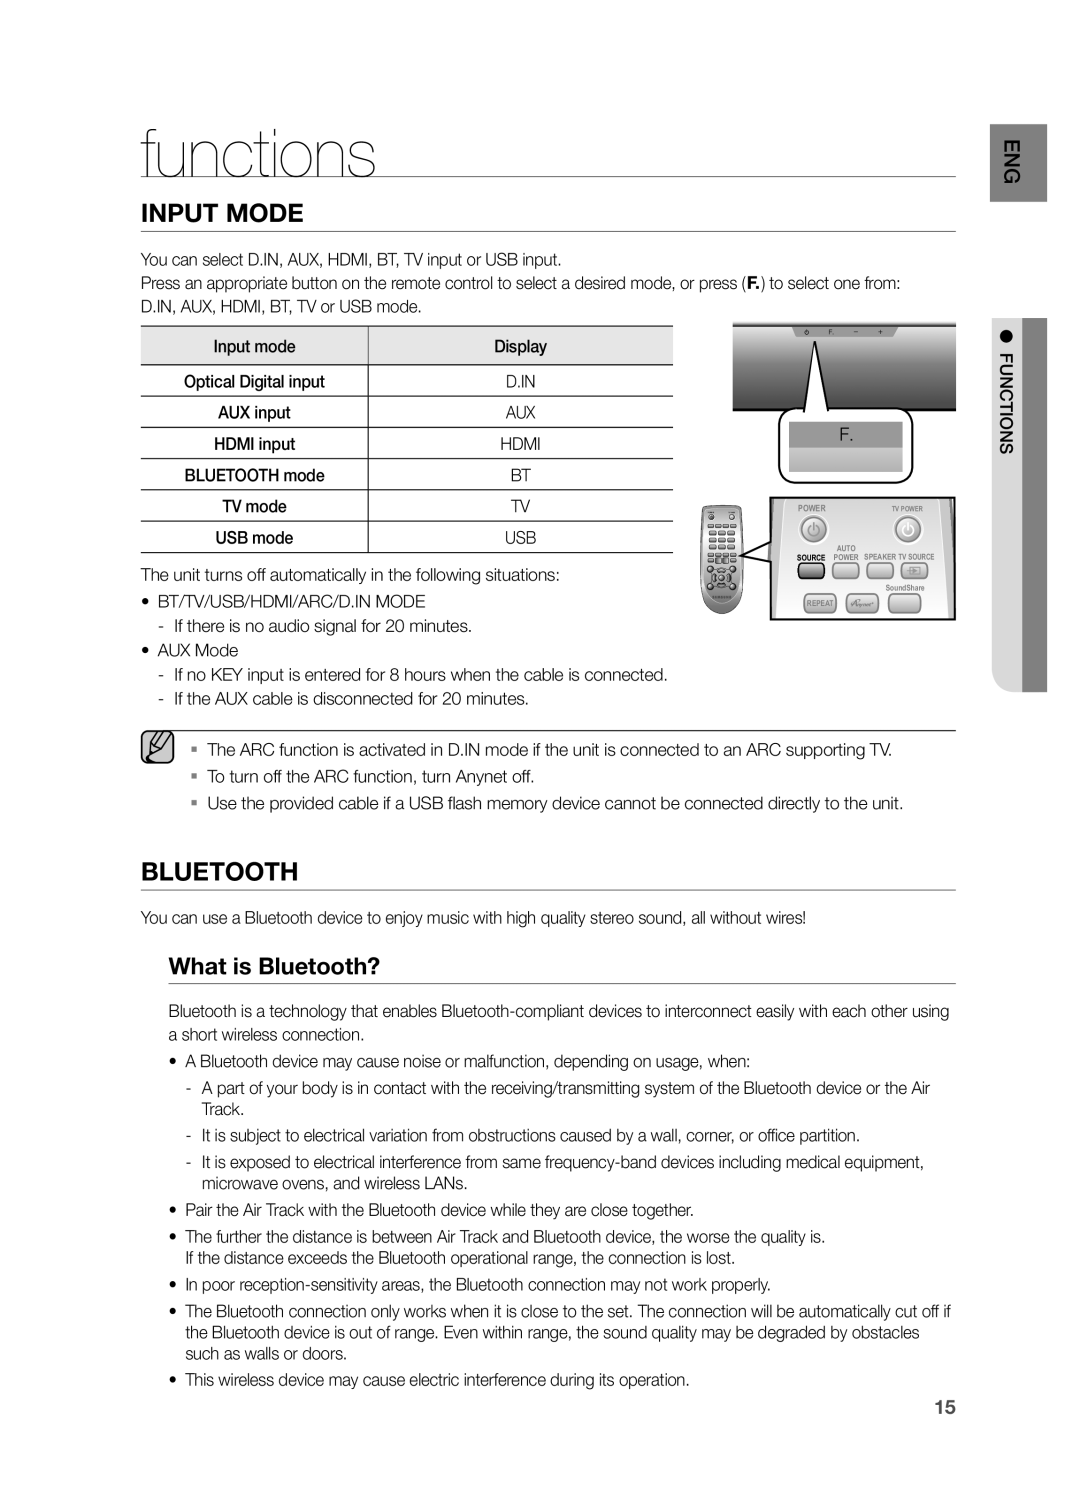 Samsung HW-FM55C user manual functions, input mode, Bluetooth 